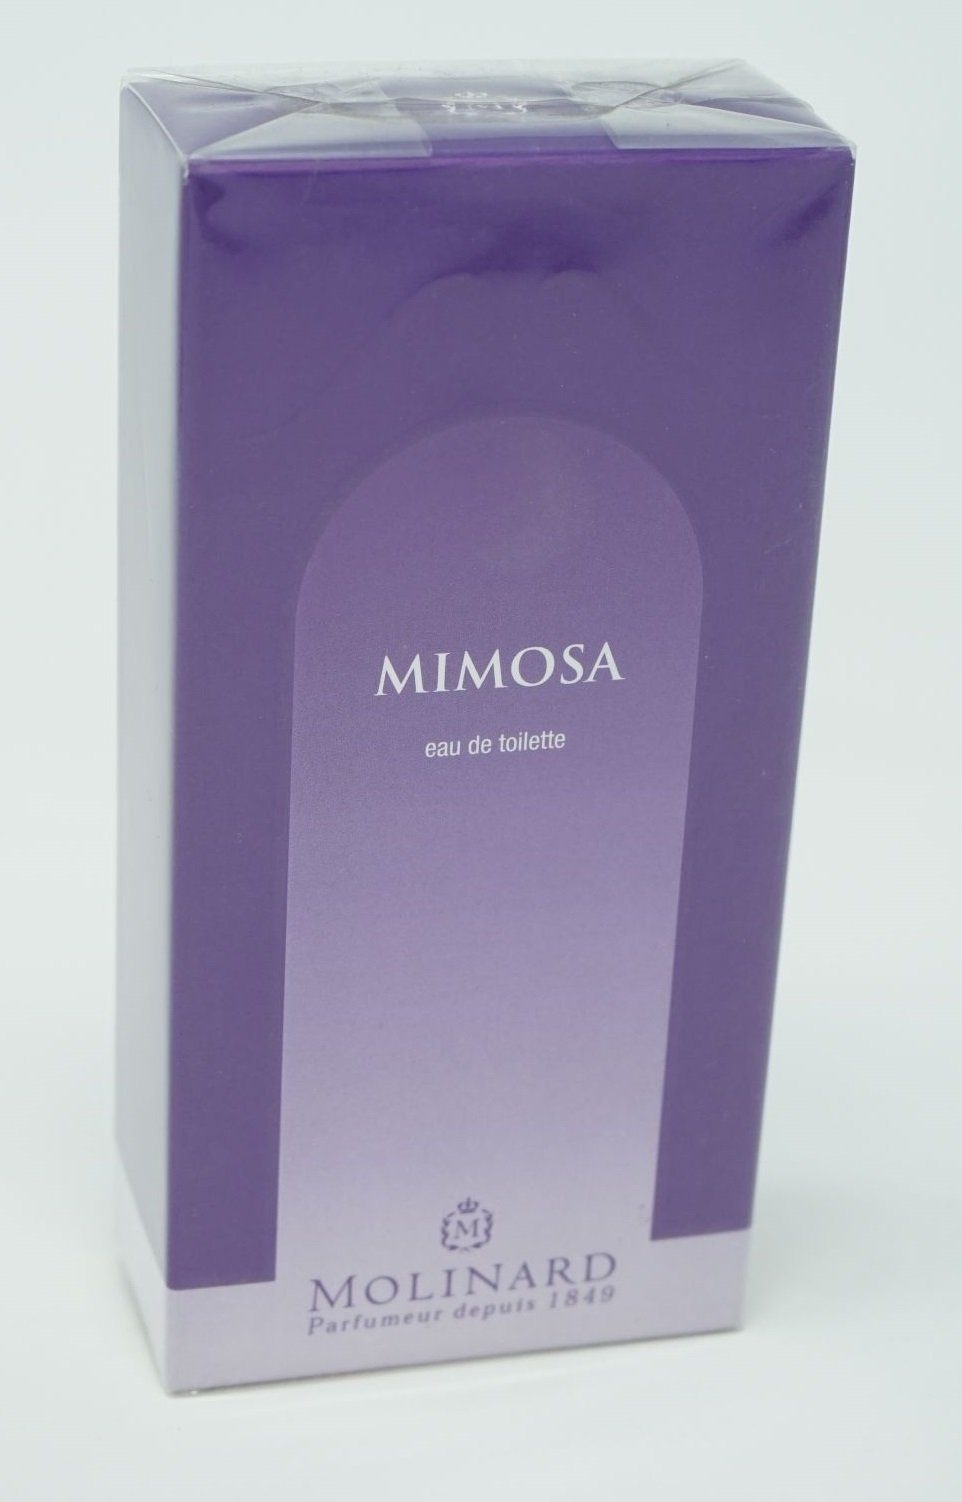 Molinard Eau de Toilette Mimosa 100 ml Toilette de Spray Eau Molinard